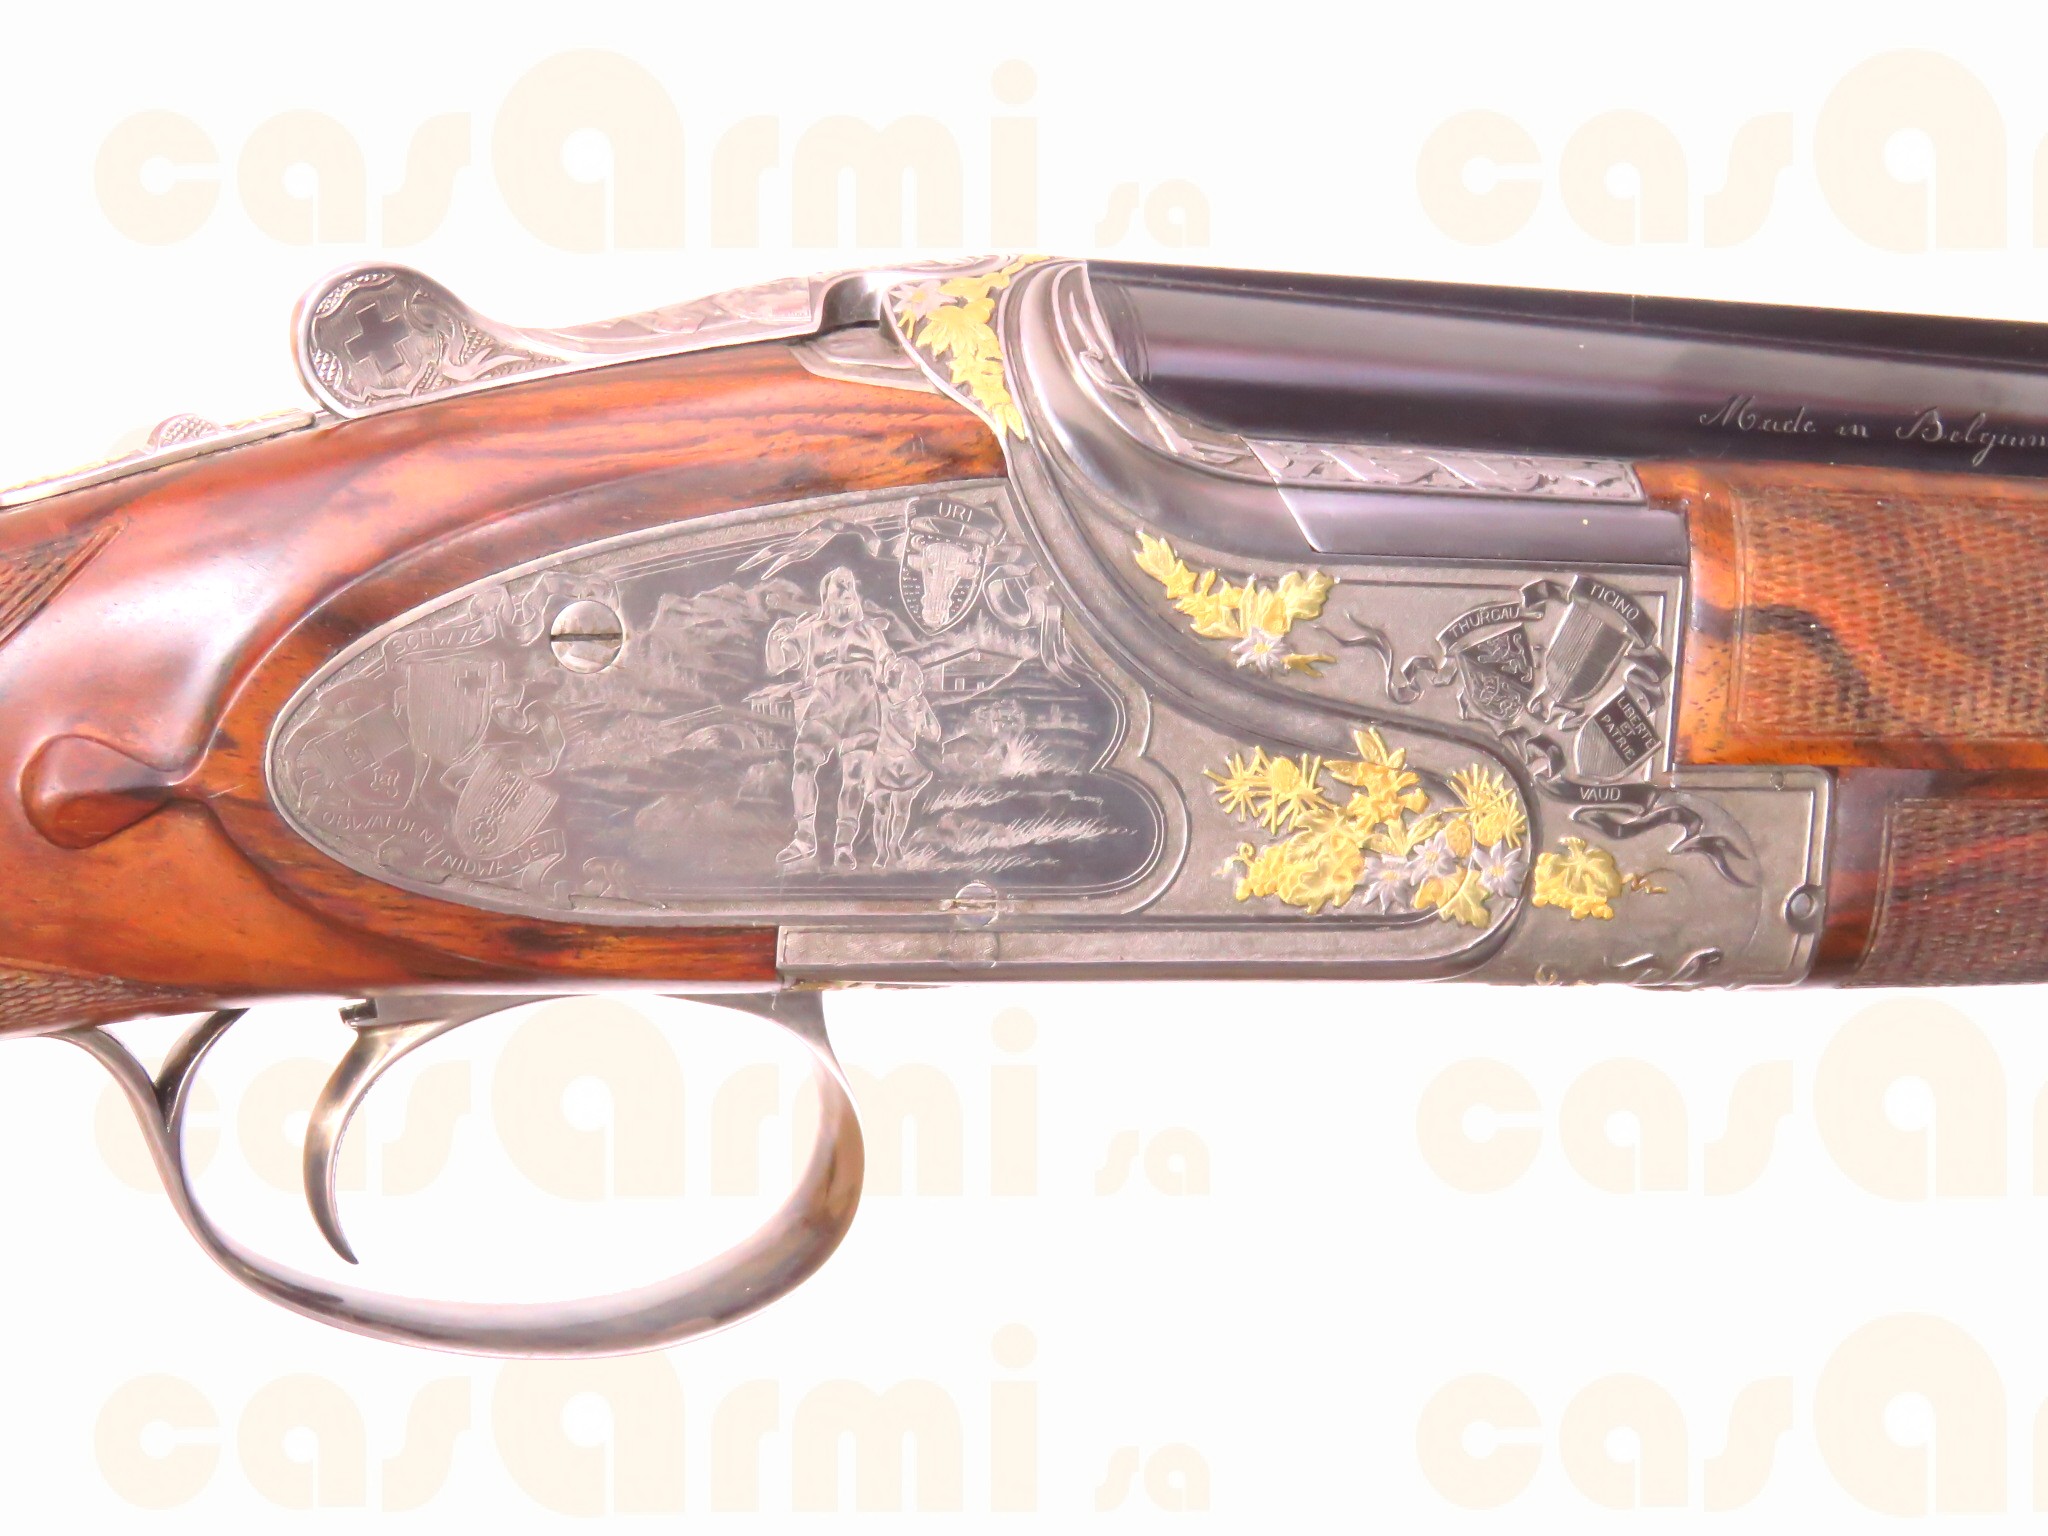 FN Herstal sovrapposto giubileo 700.mo CH, canne 70cm, incisione 'Baerten C', pezzo 1/6 12/70